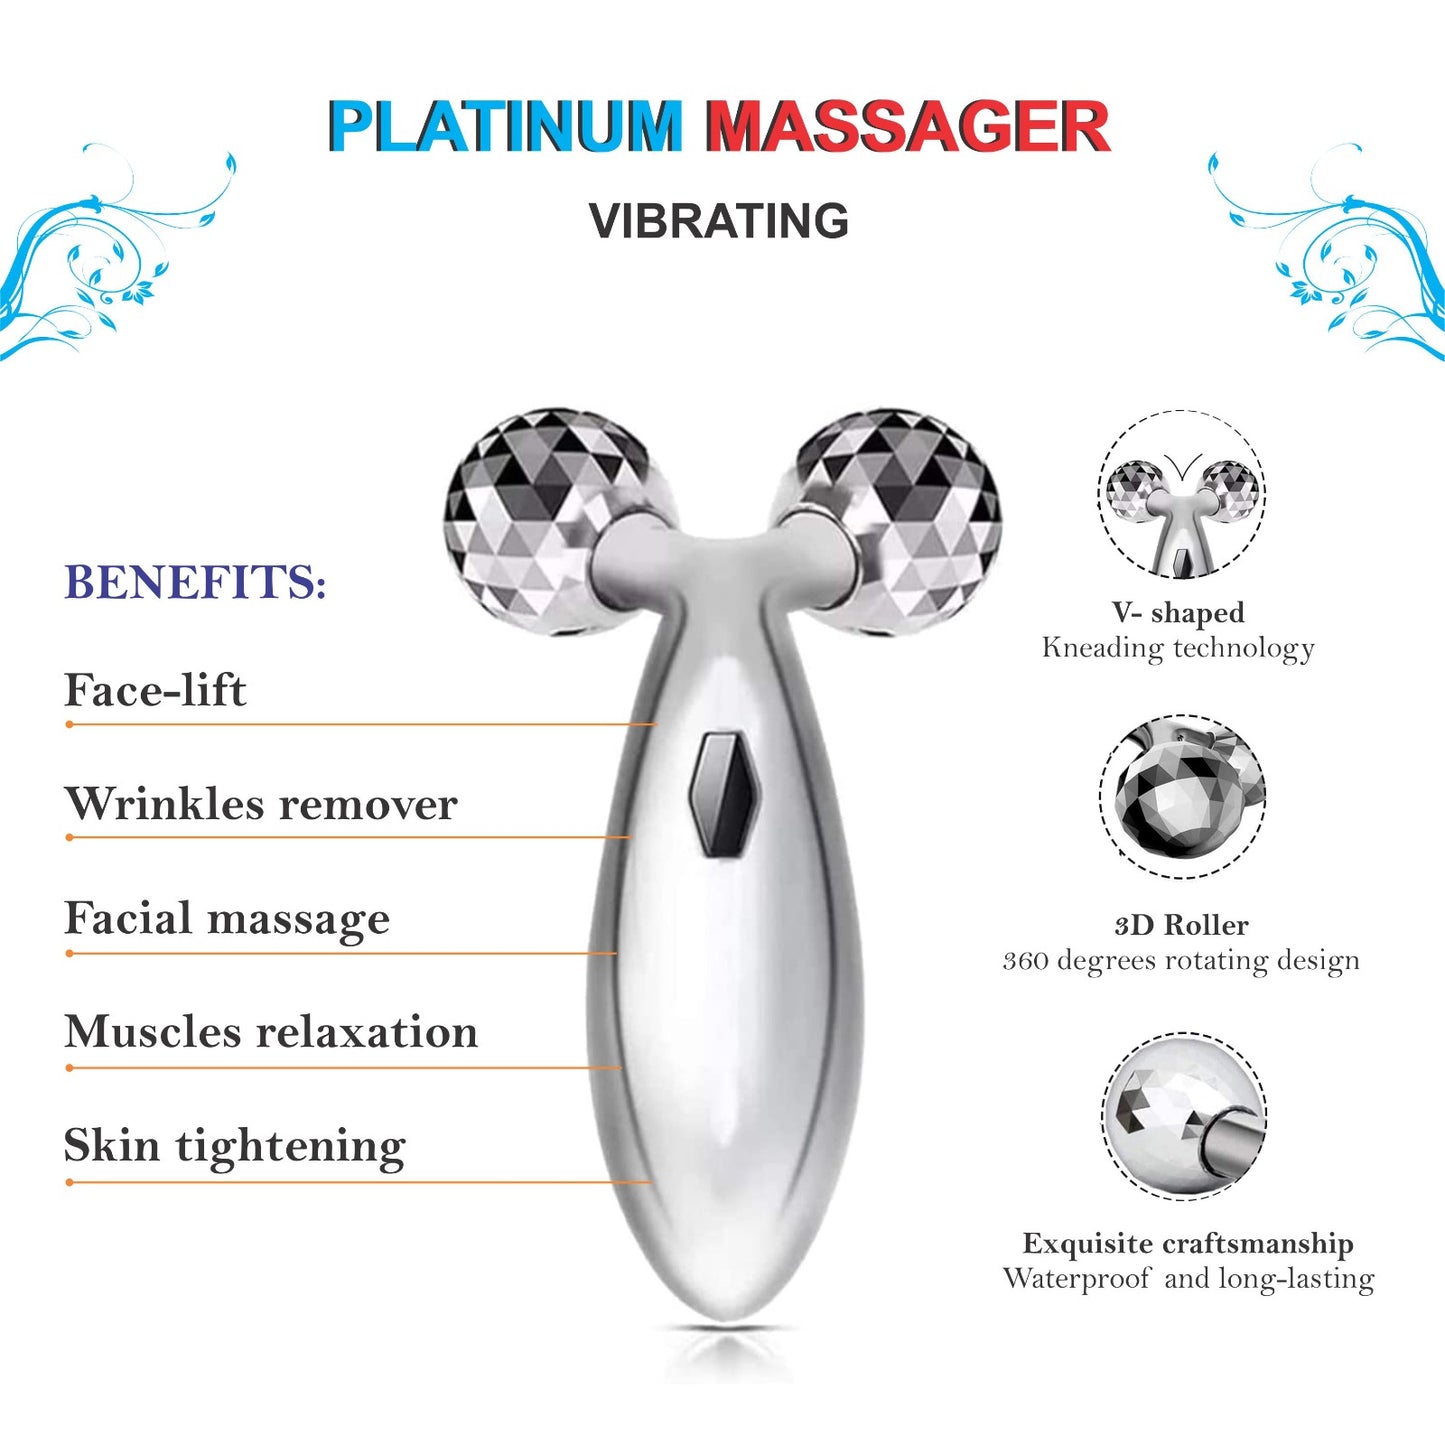 Platinum Massager